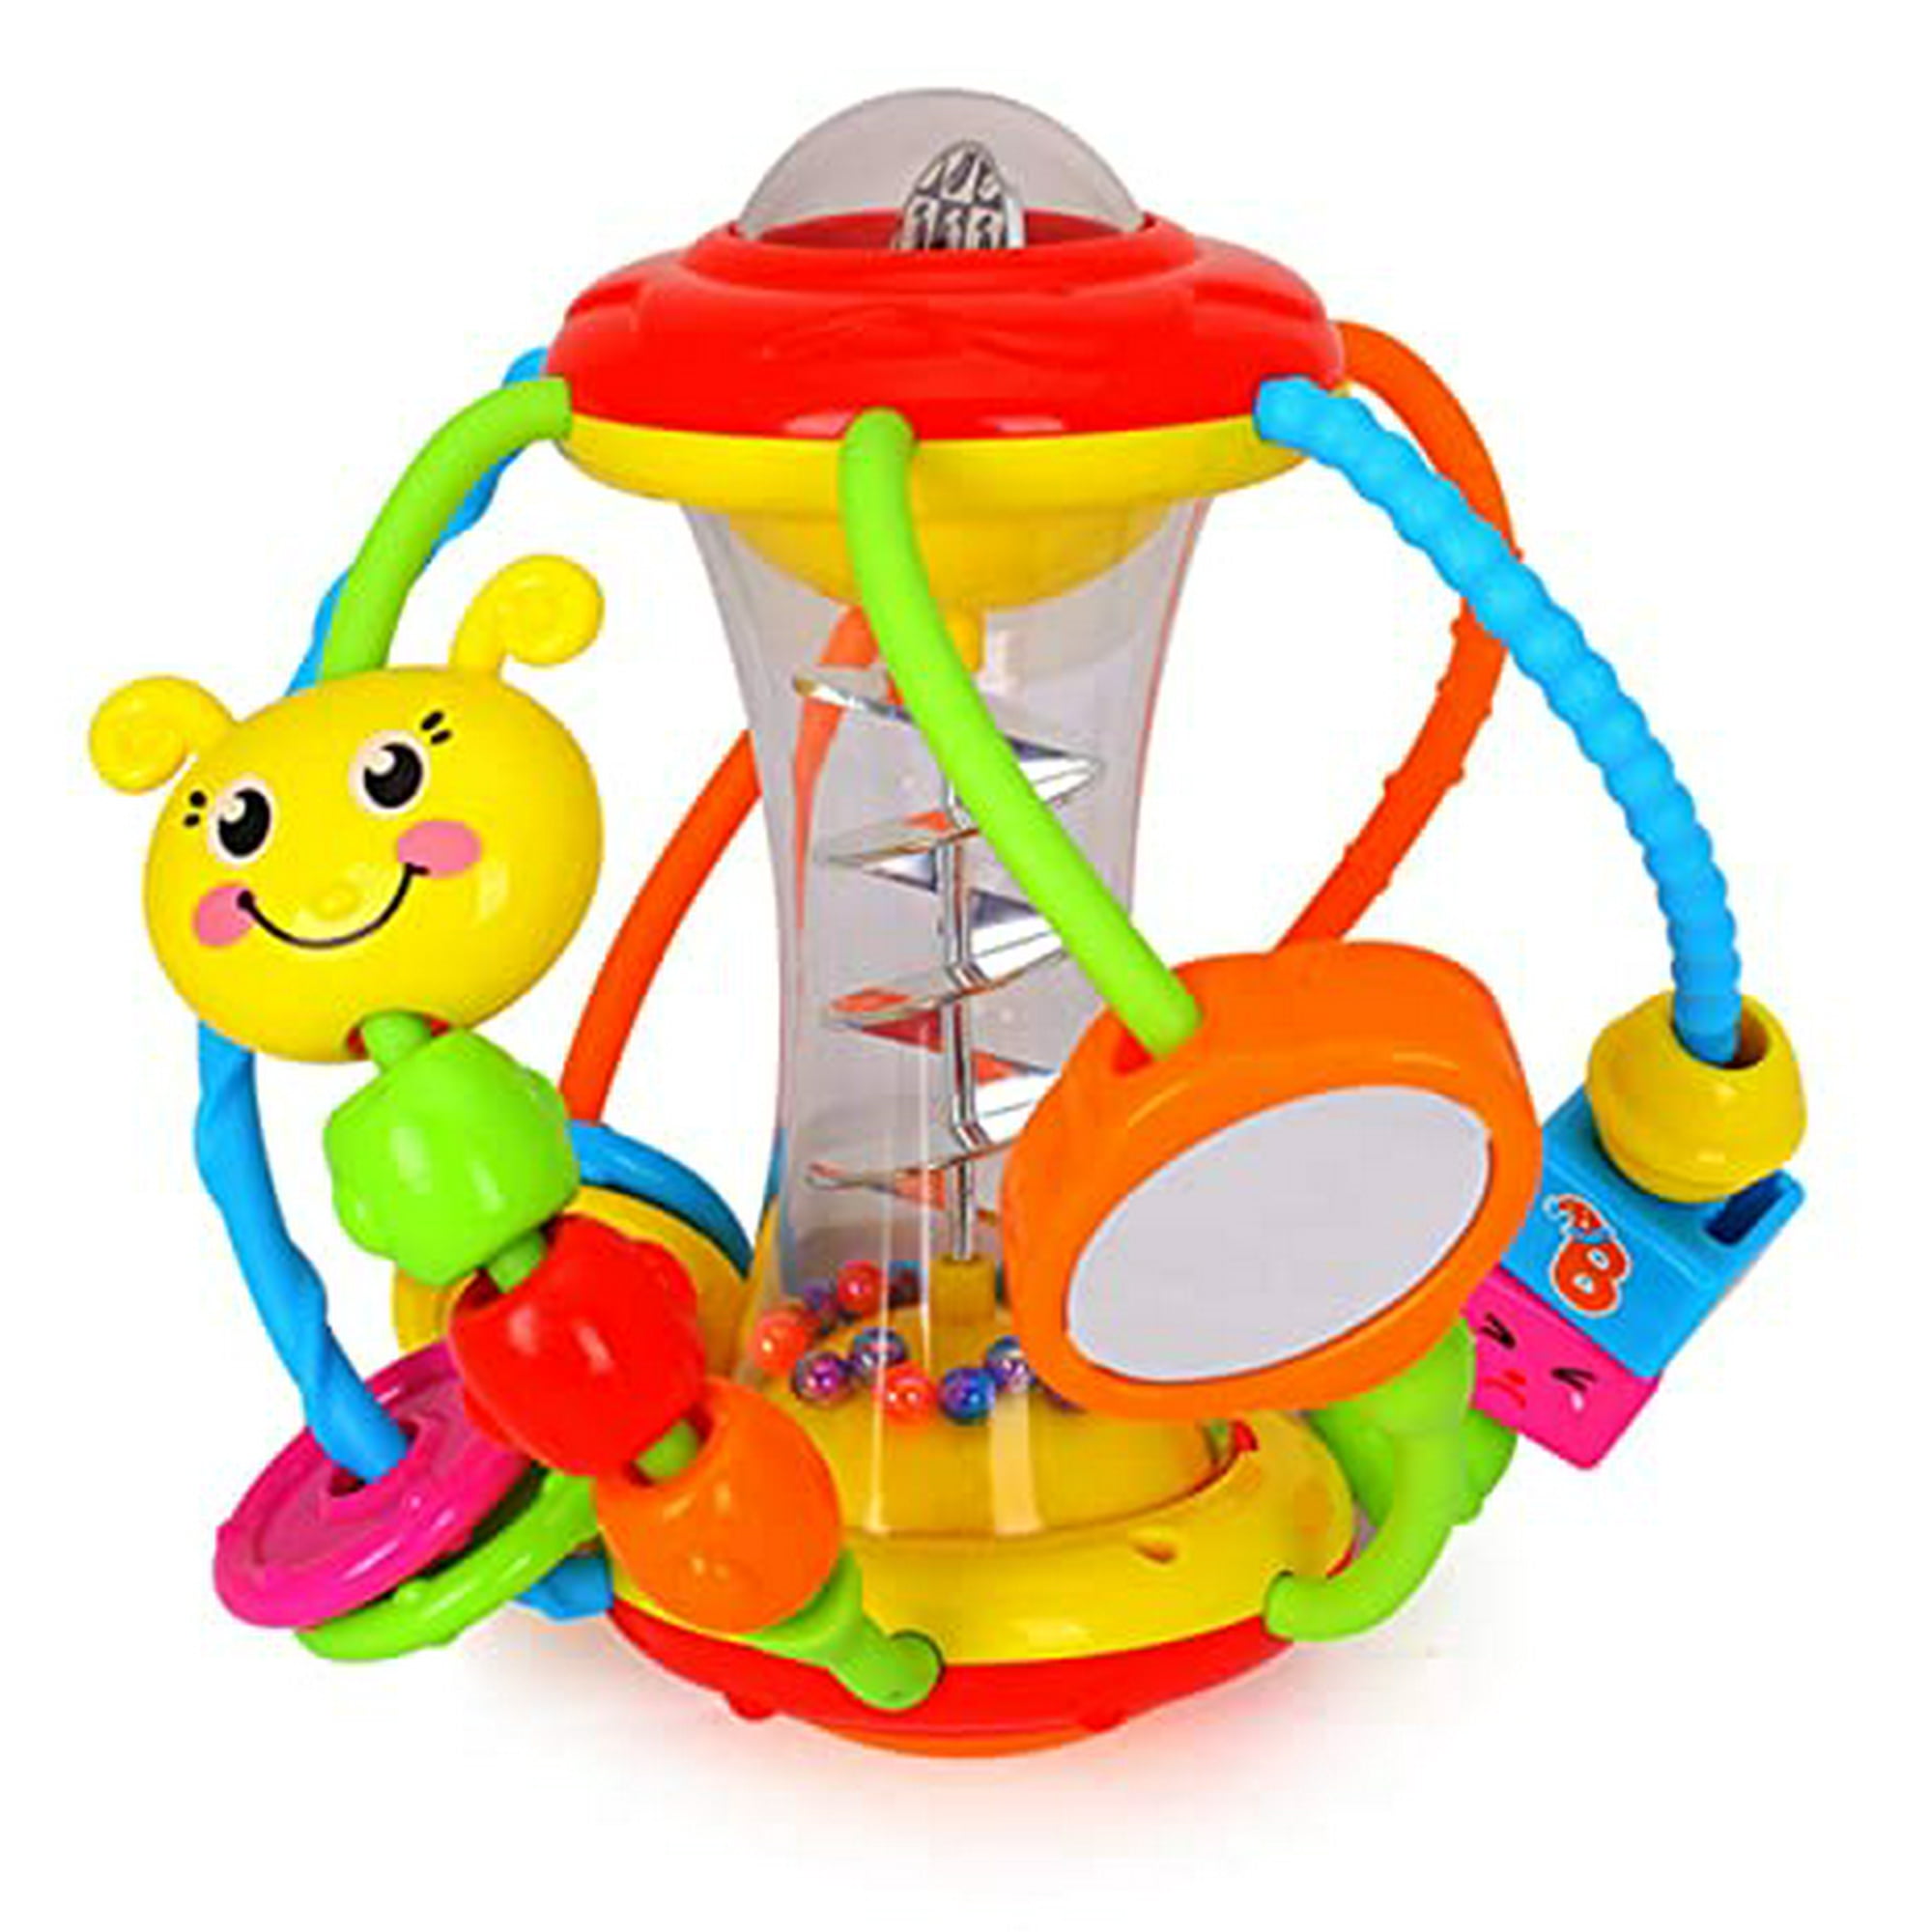 Juguetes para bebés 1 año Ventosa Spinner Juegos para bebés Sonajero  sensorial Juguetes para bebés 6 12 meses Juguetes para el desarrollo del  bebé Spining Top